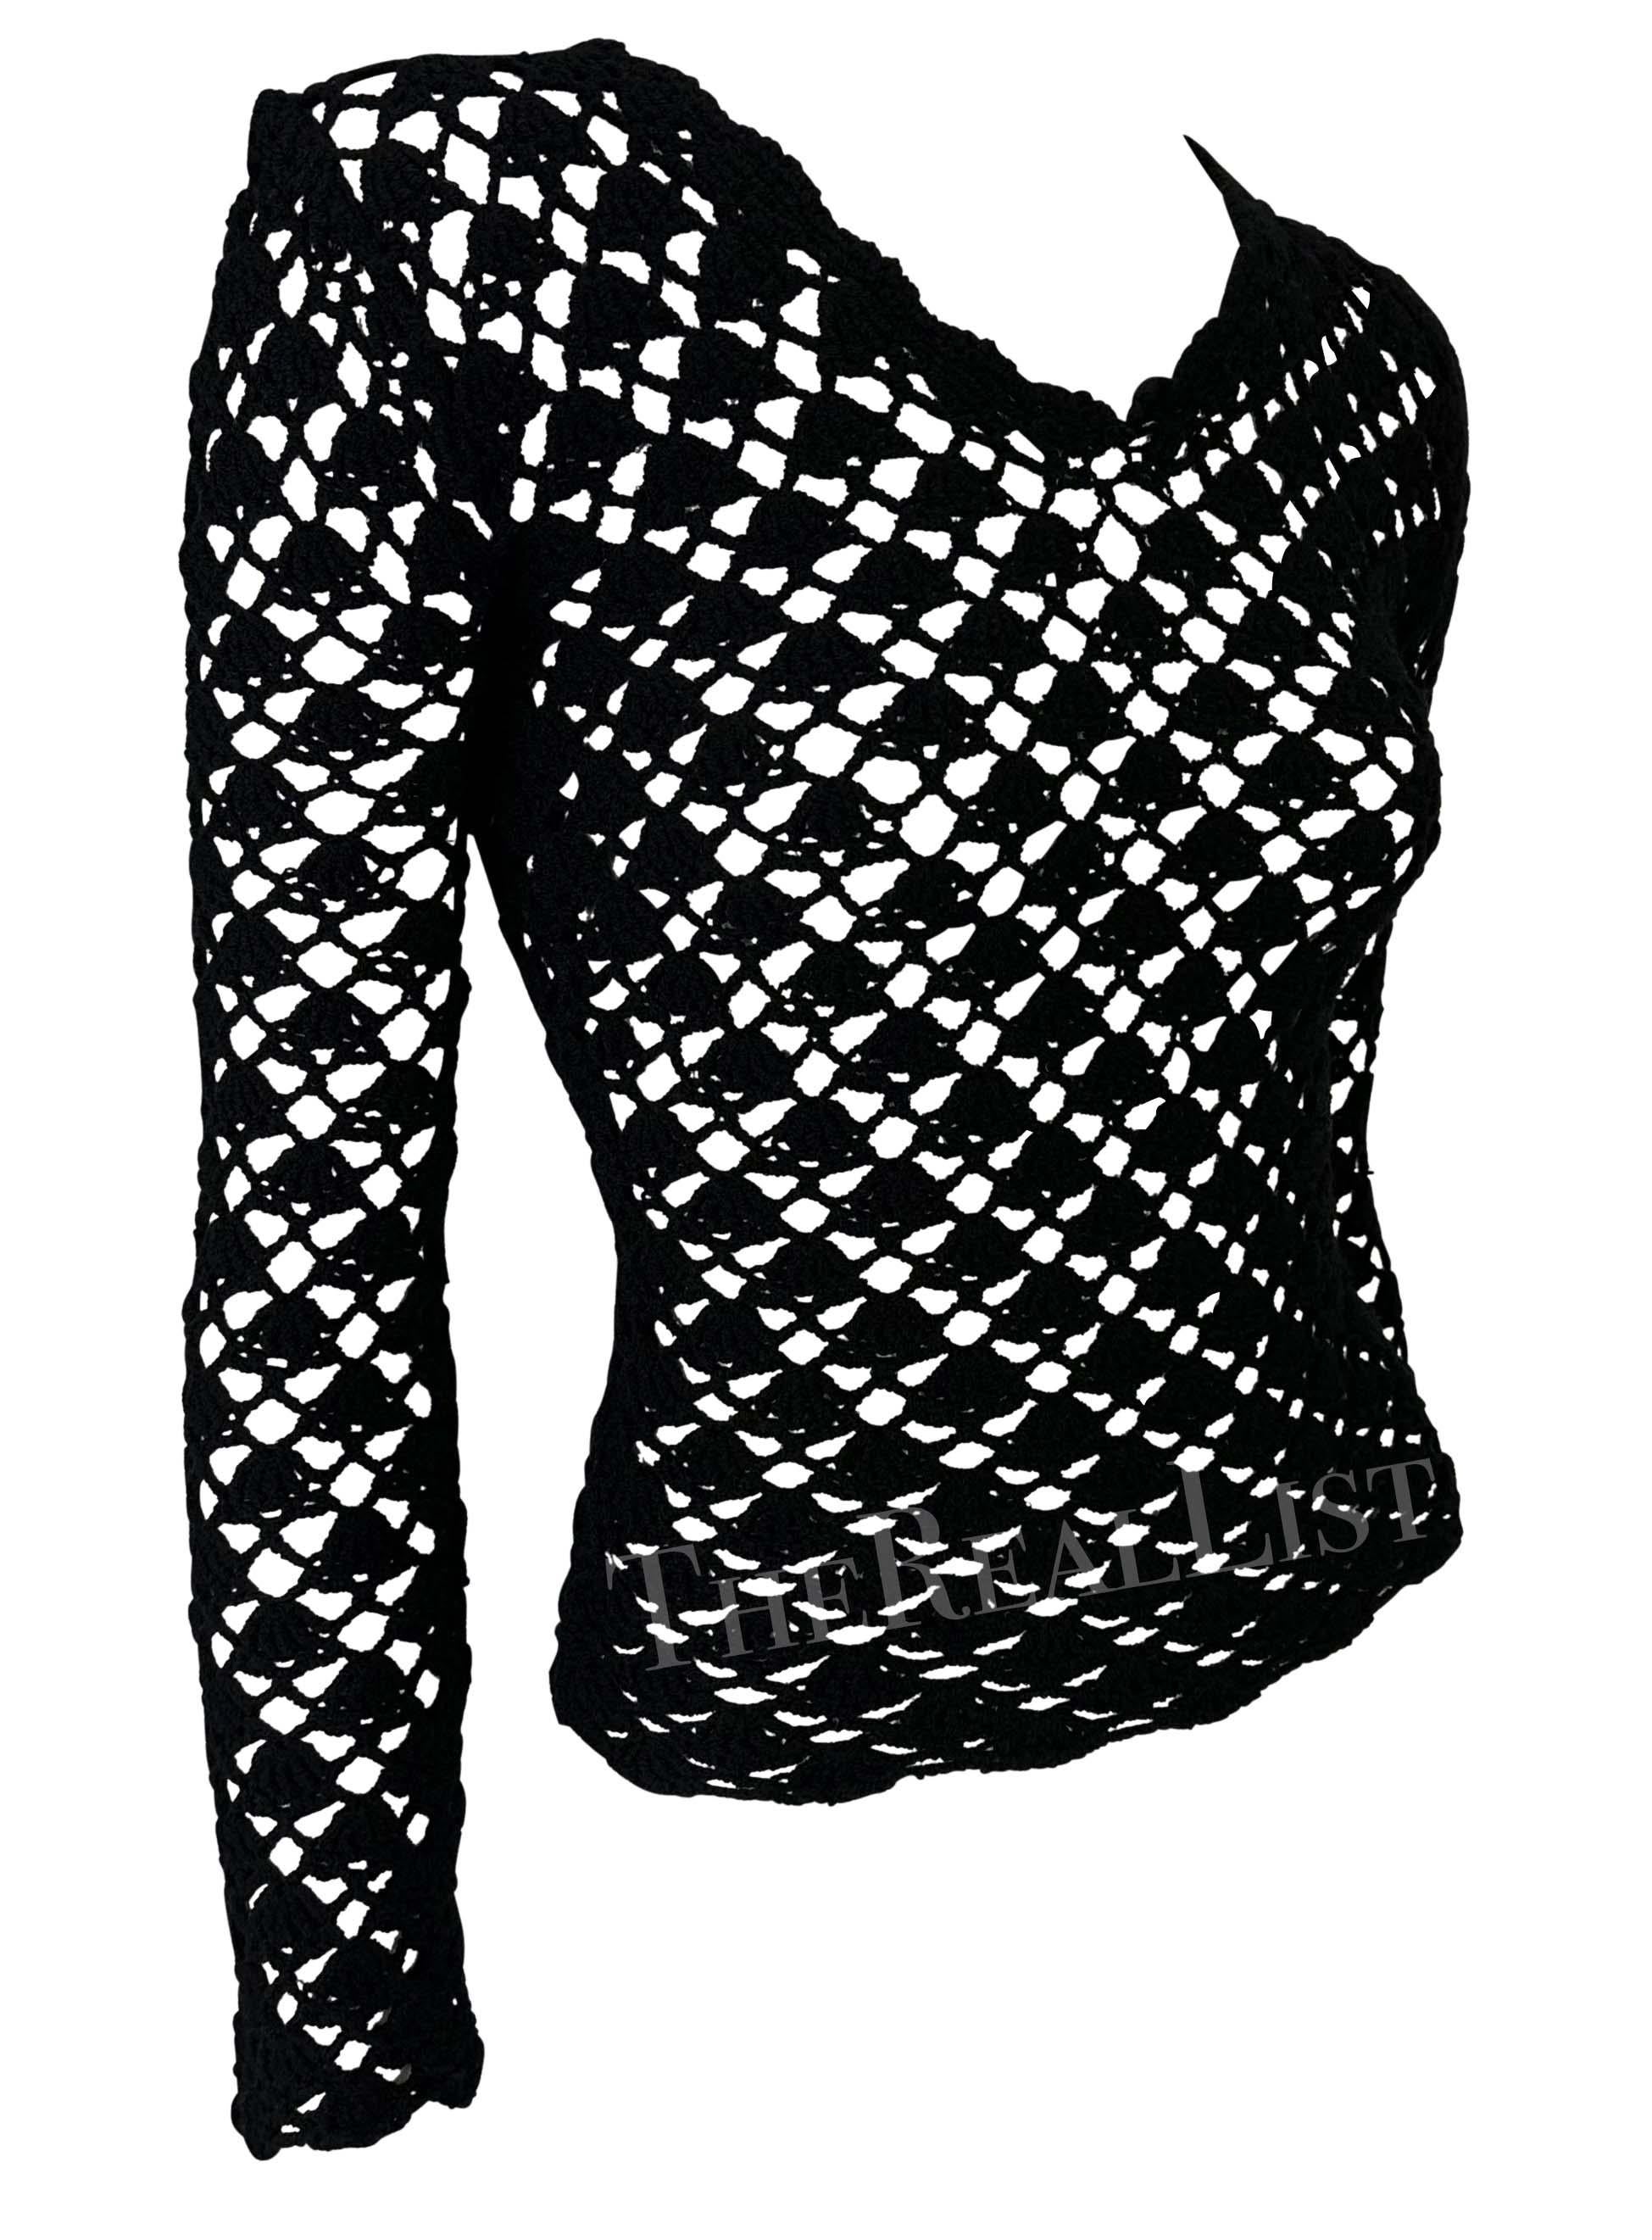 S/S 1997 Dolce & Gabbana Black Crochet Sheer Sweater Top For Sale 4